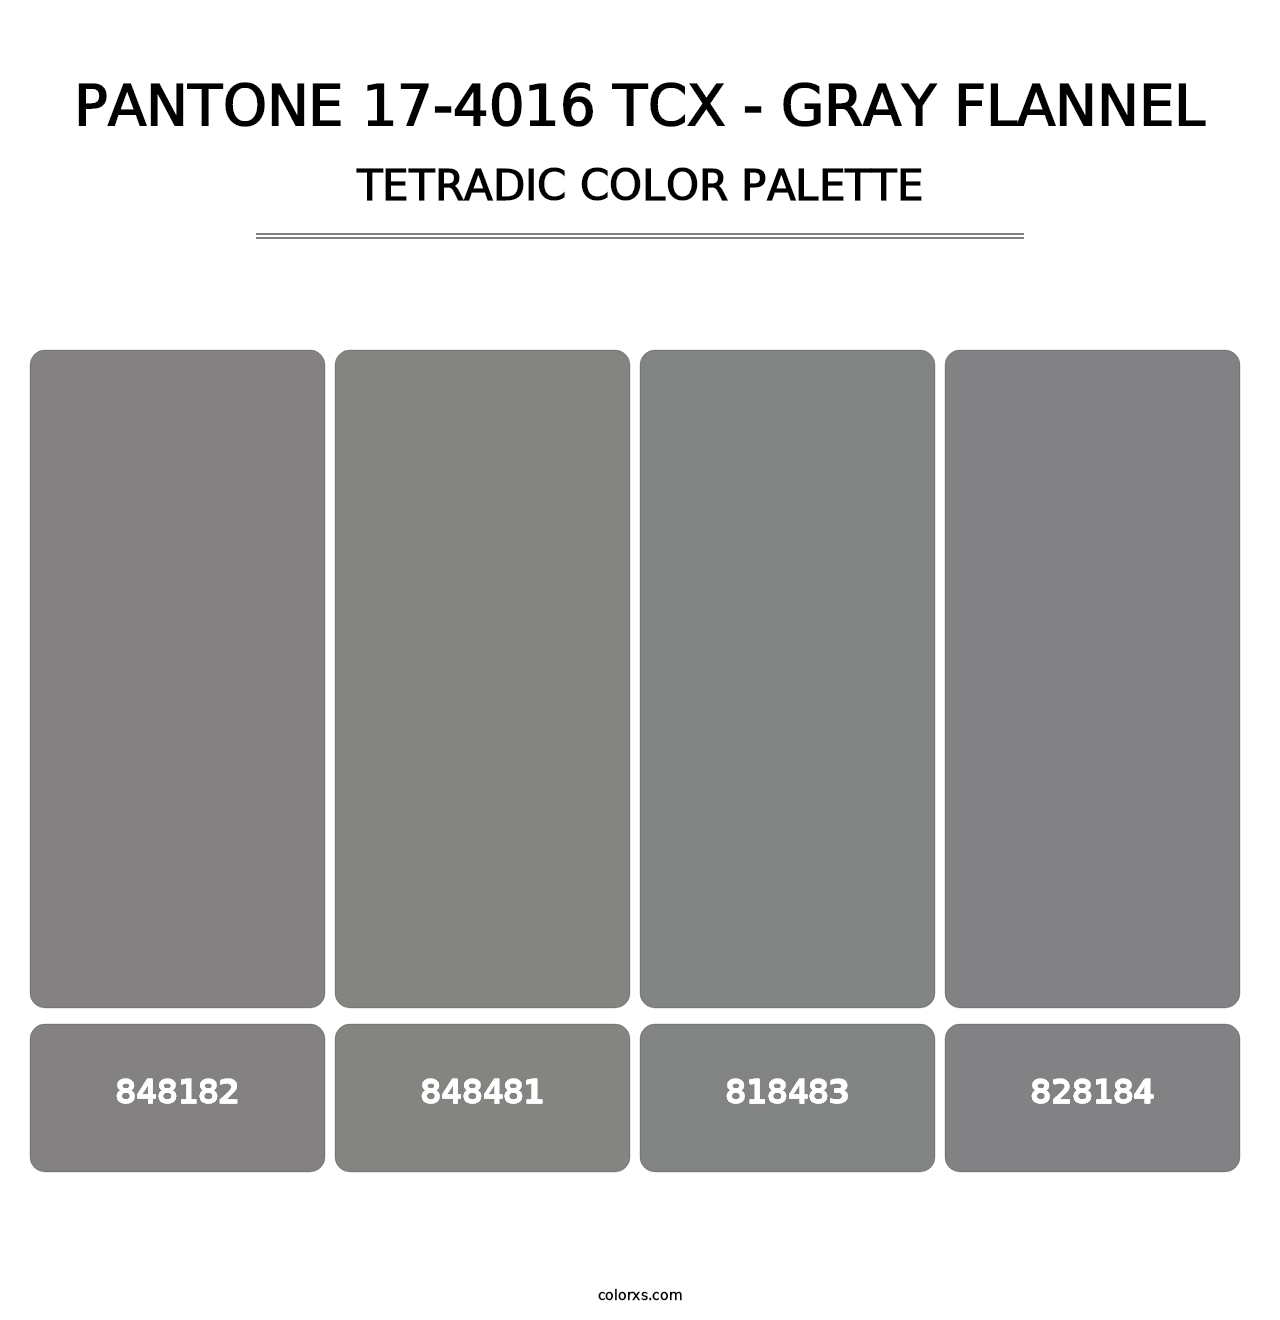 PANTONE 17-4016 TCX - Gray Flannel - Tetradic Color Palette